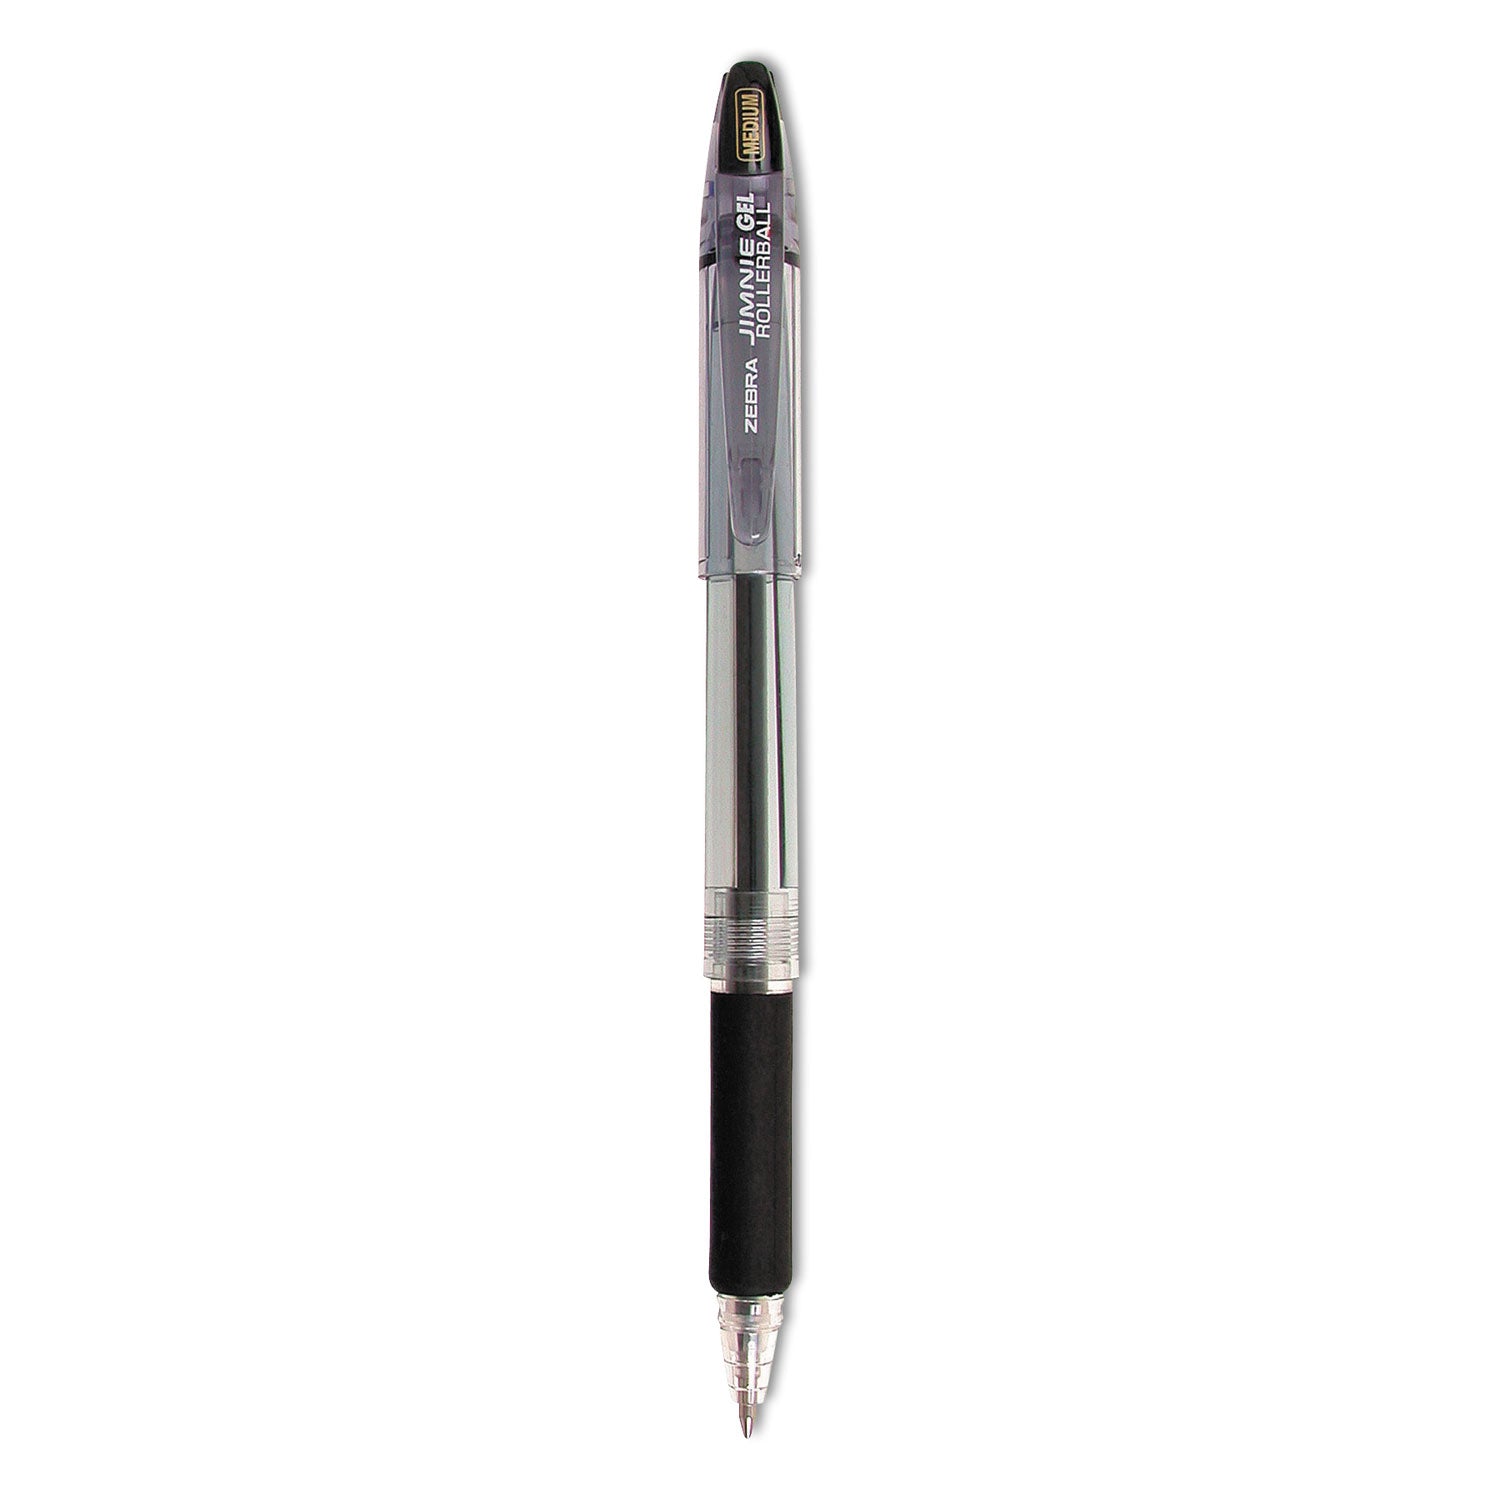 Jimnie Gel Pen Value Pack, Stick, Medium 0.7 mm, Black Ink, Clear/Black Barrel, 24/Box - 